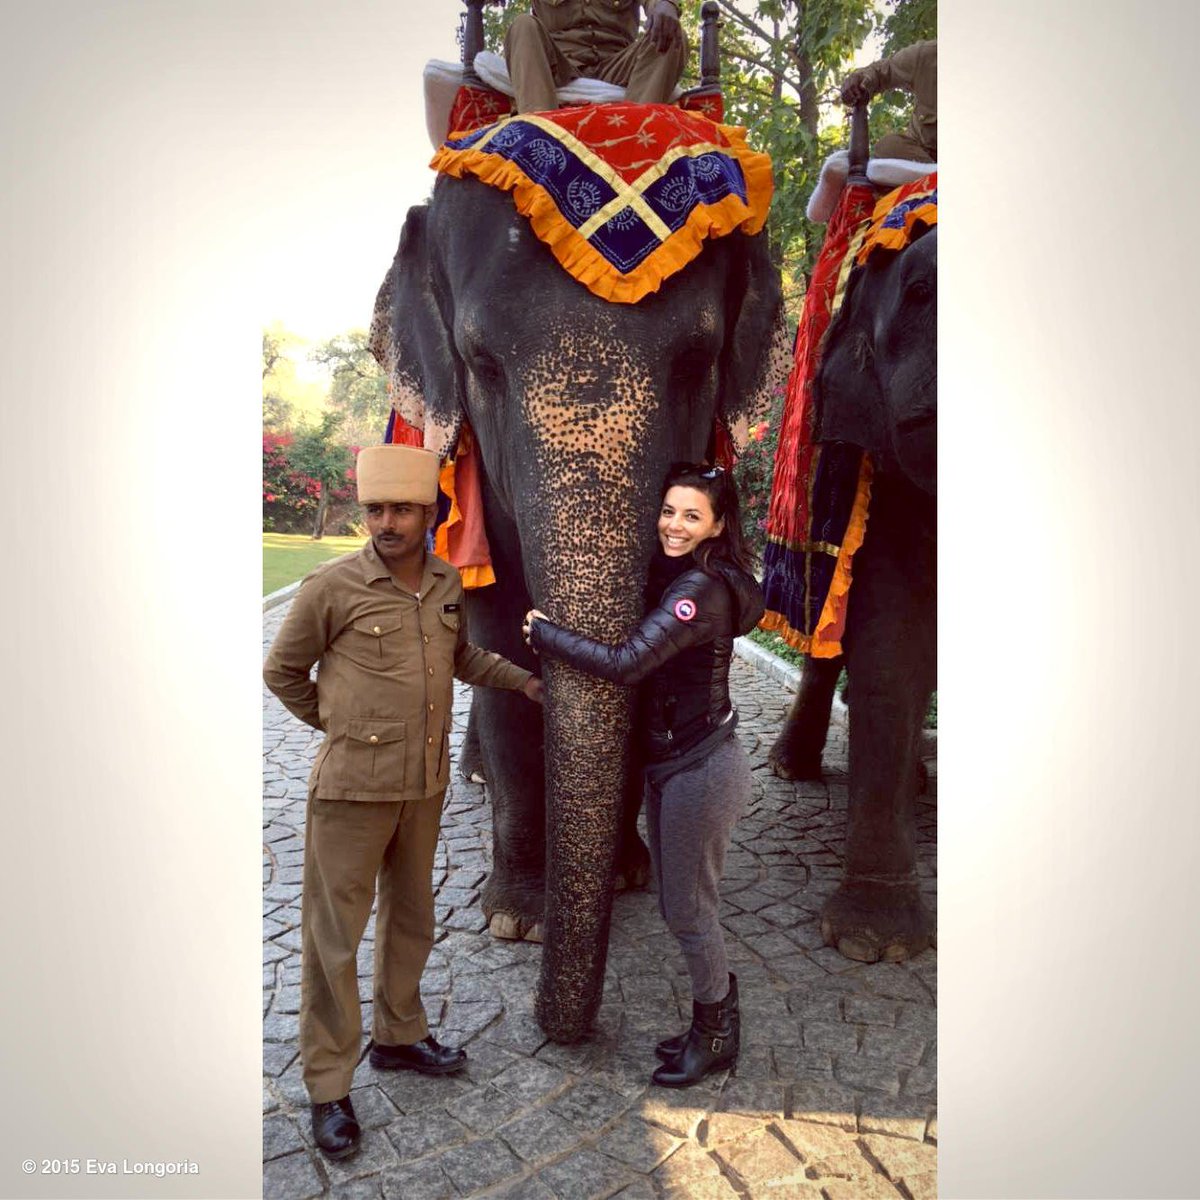 My new friend! #India #Elephants https://t.co/6YClBLiHGc